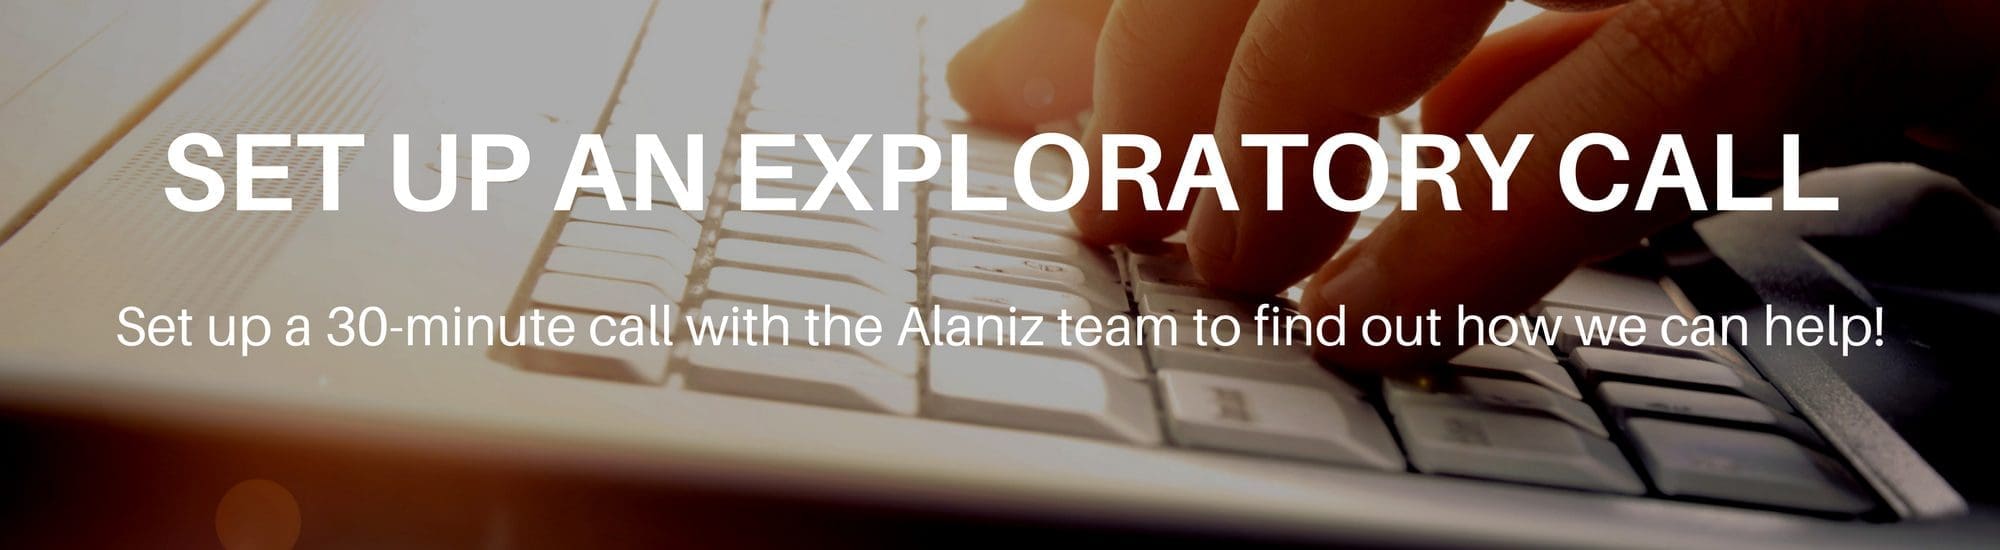 Exploratory Call Alaniz